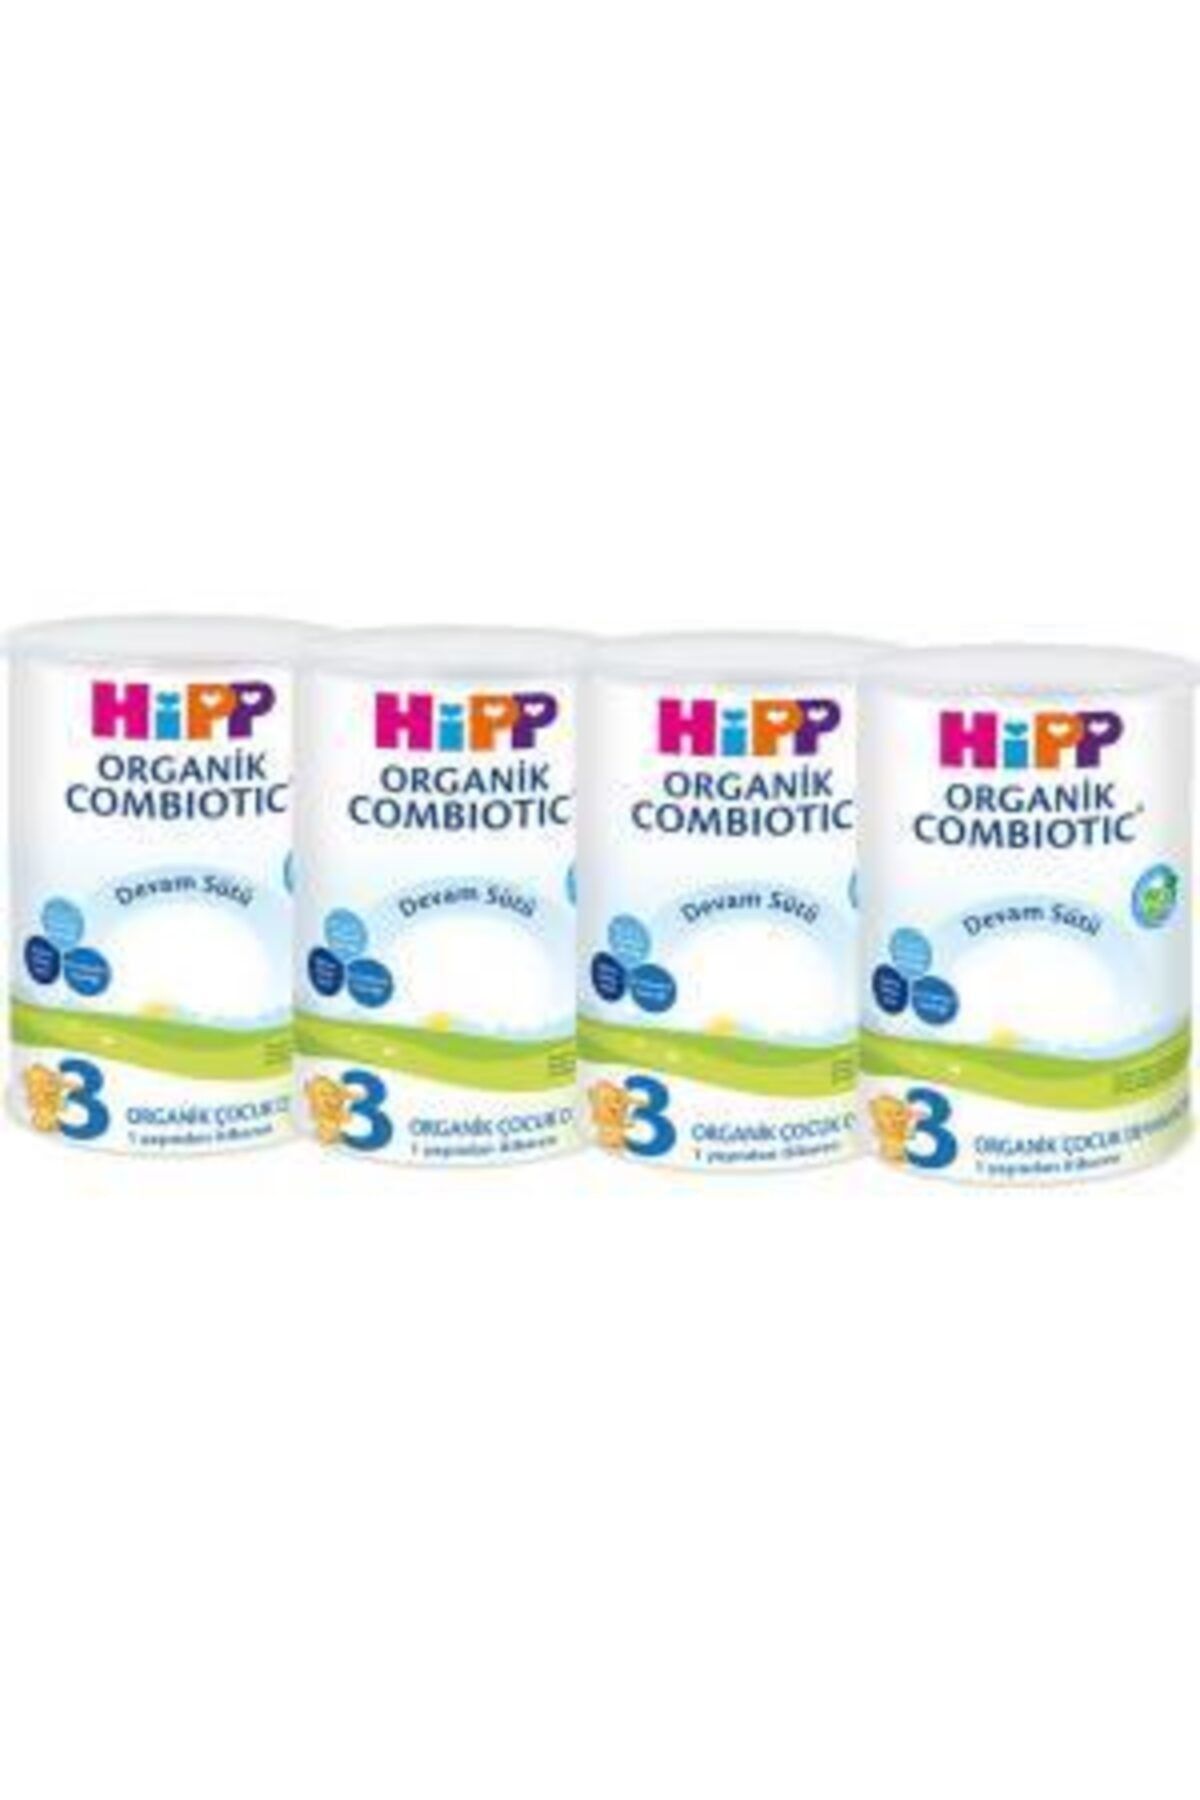 Hipp 3 Organik Combiotic Devam Sütü 350 Gr X 4 Adet